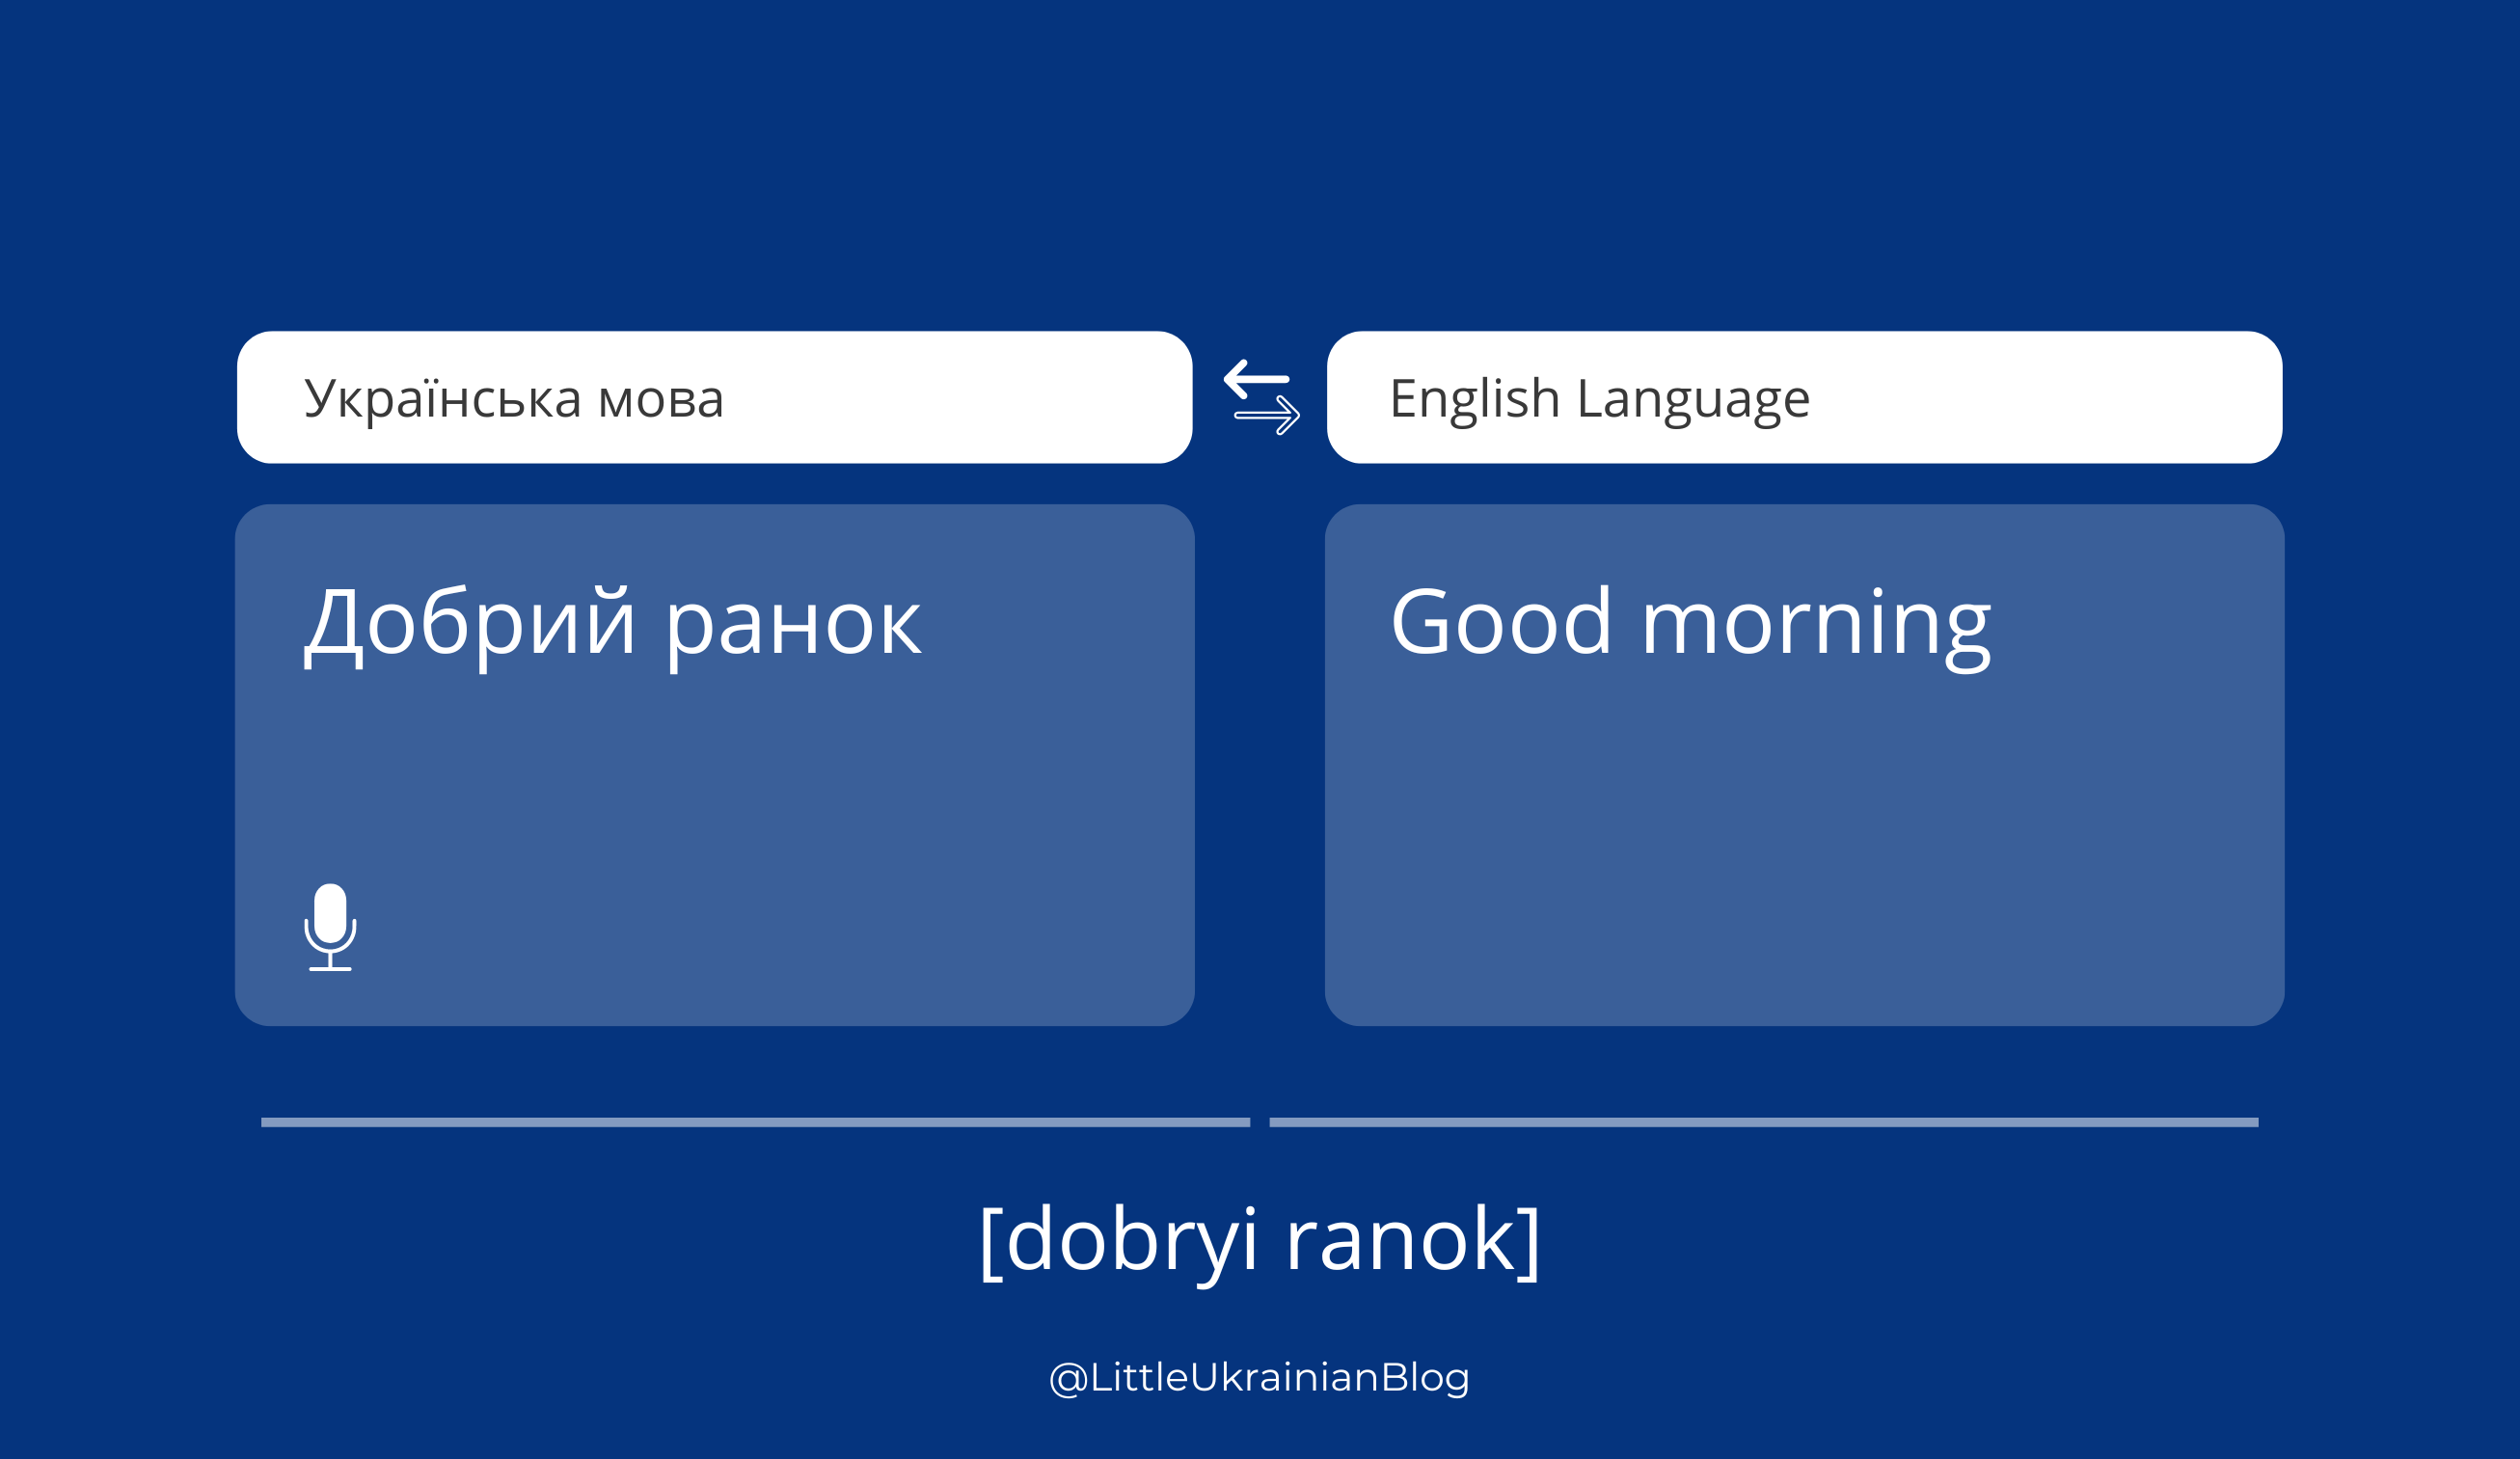 Ukrainian Greetings for Beginners, Добрий ранок, dobryi ranok, Good morning in Ukrainian